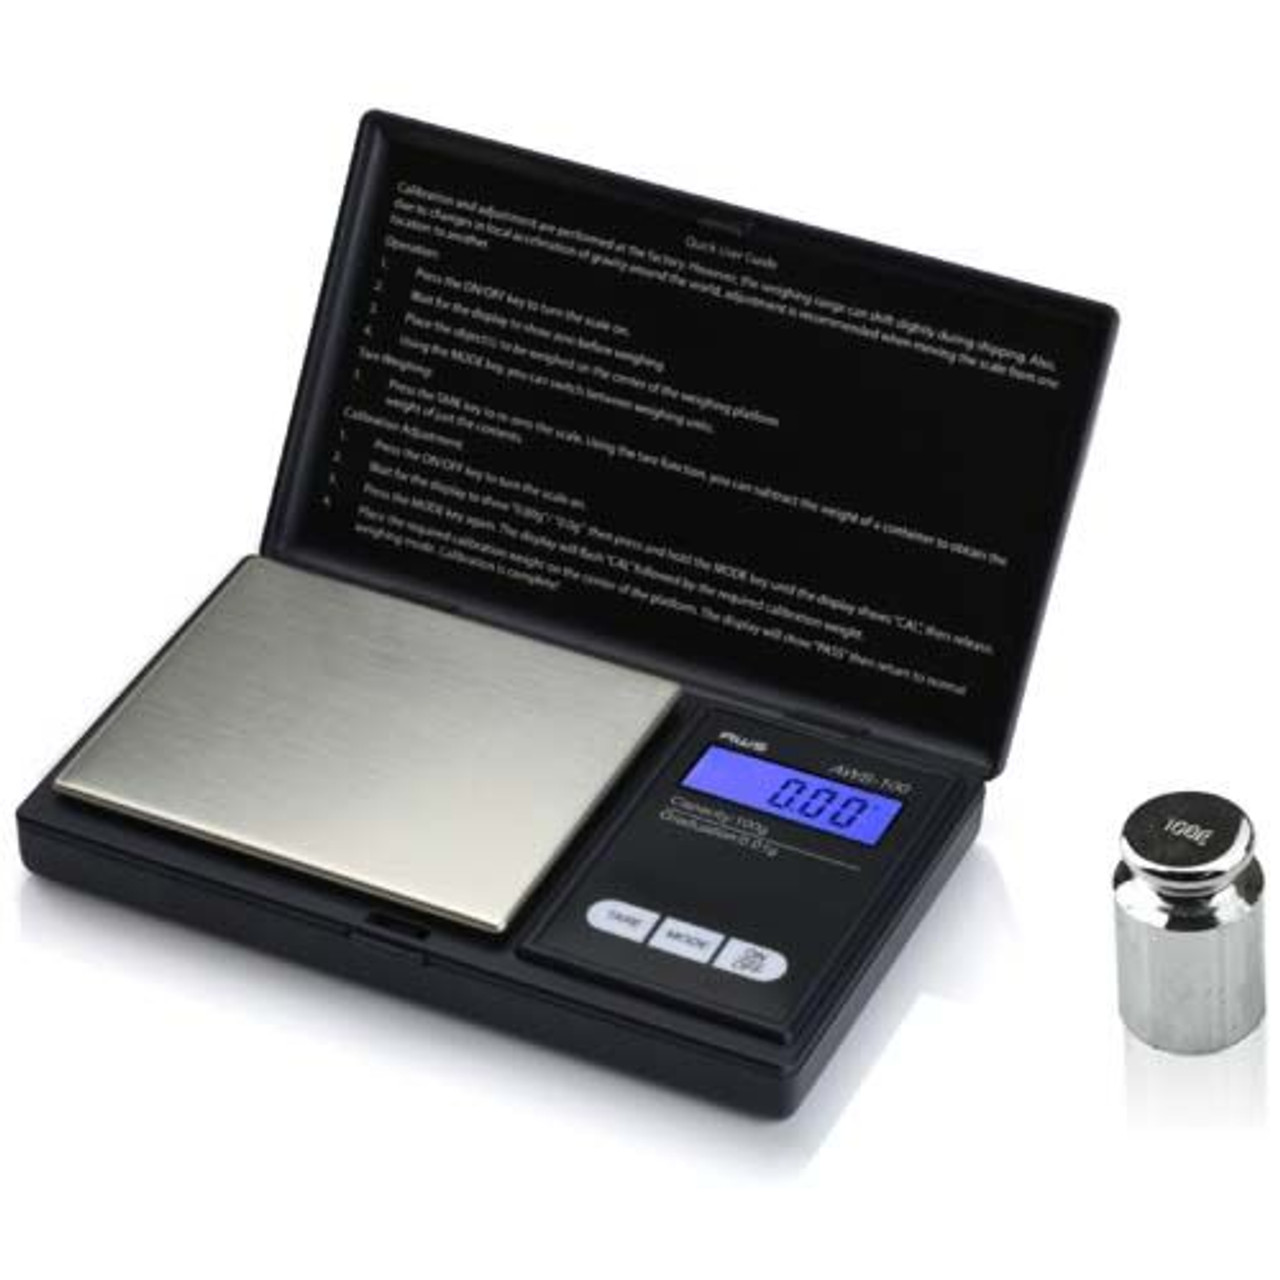 Digital Pocket Scale (0.01g)